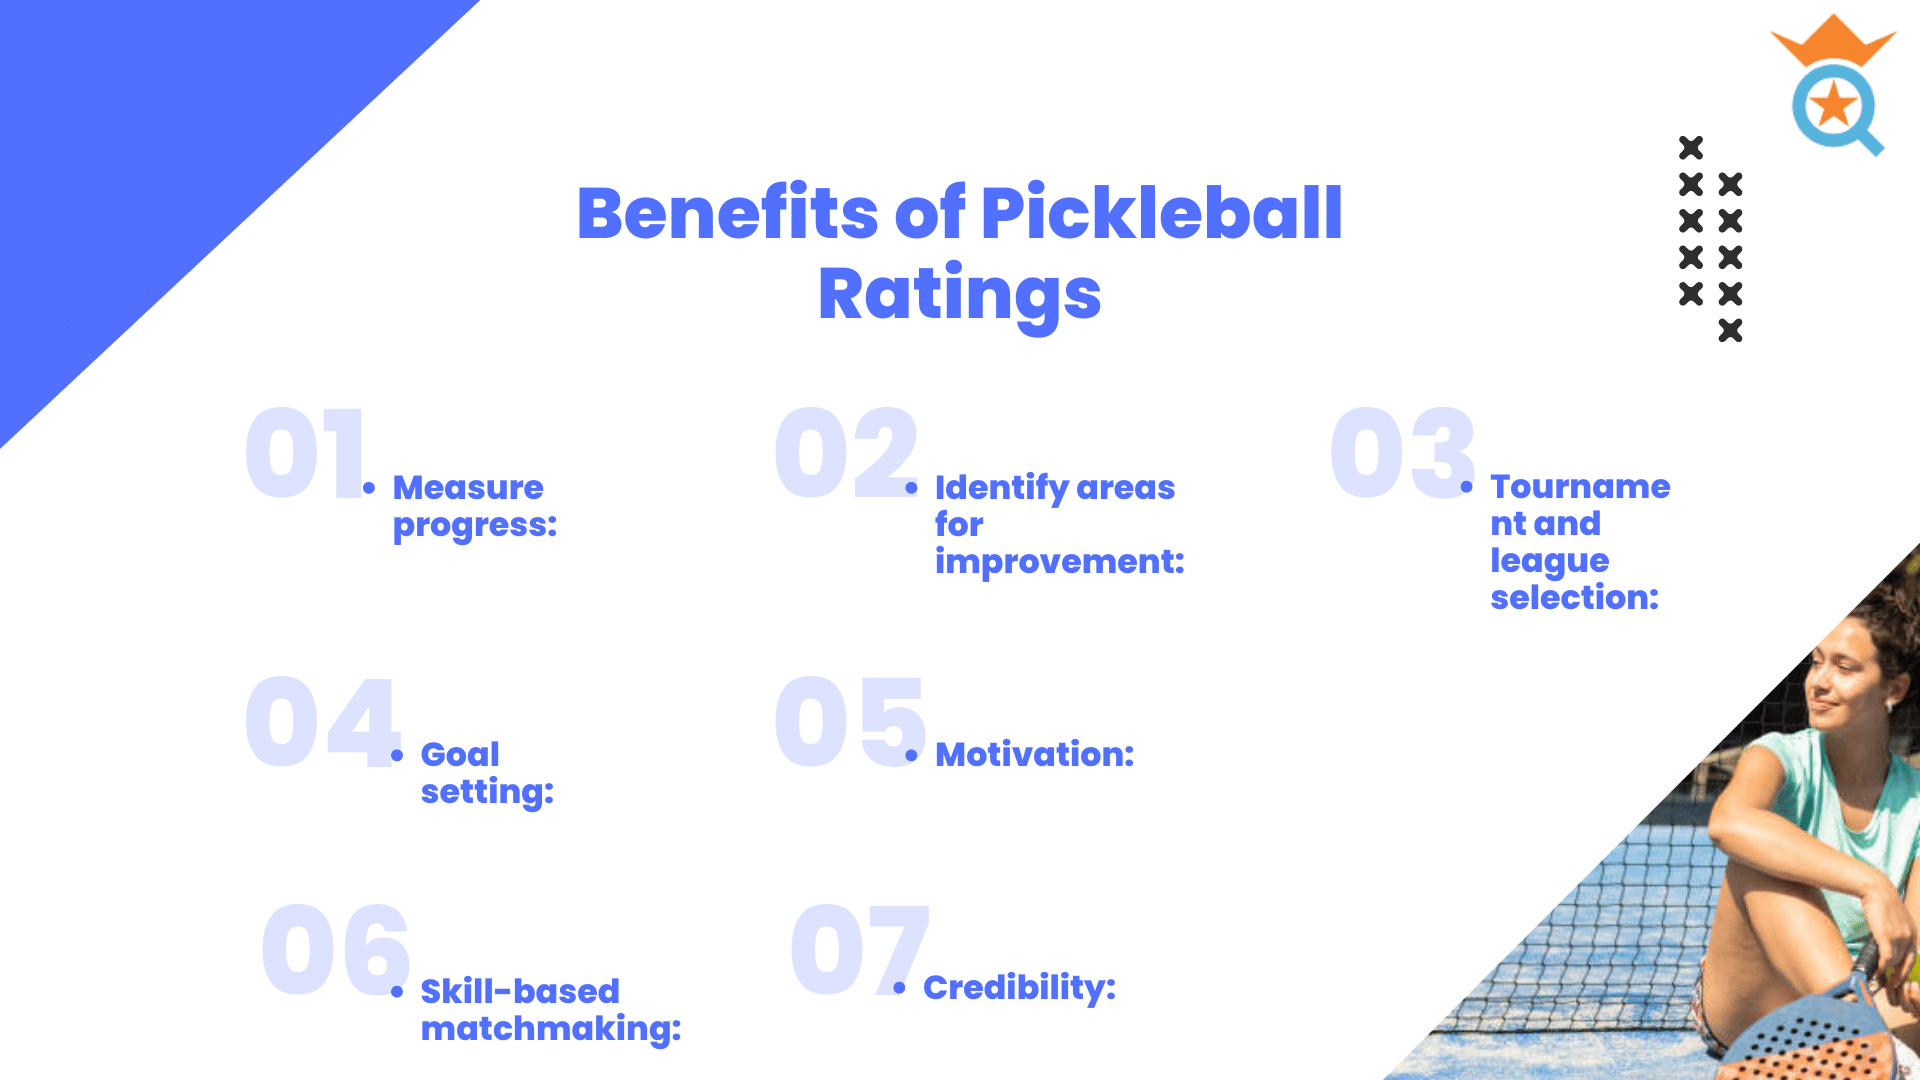 Benefits of Pickleball Ratings